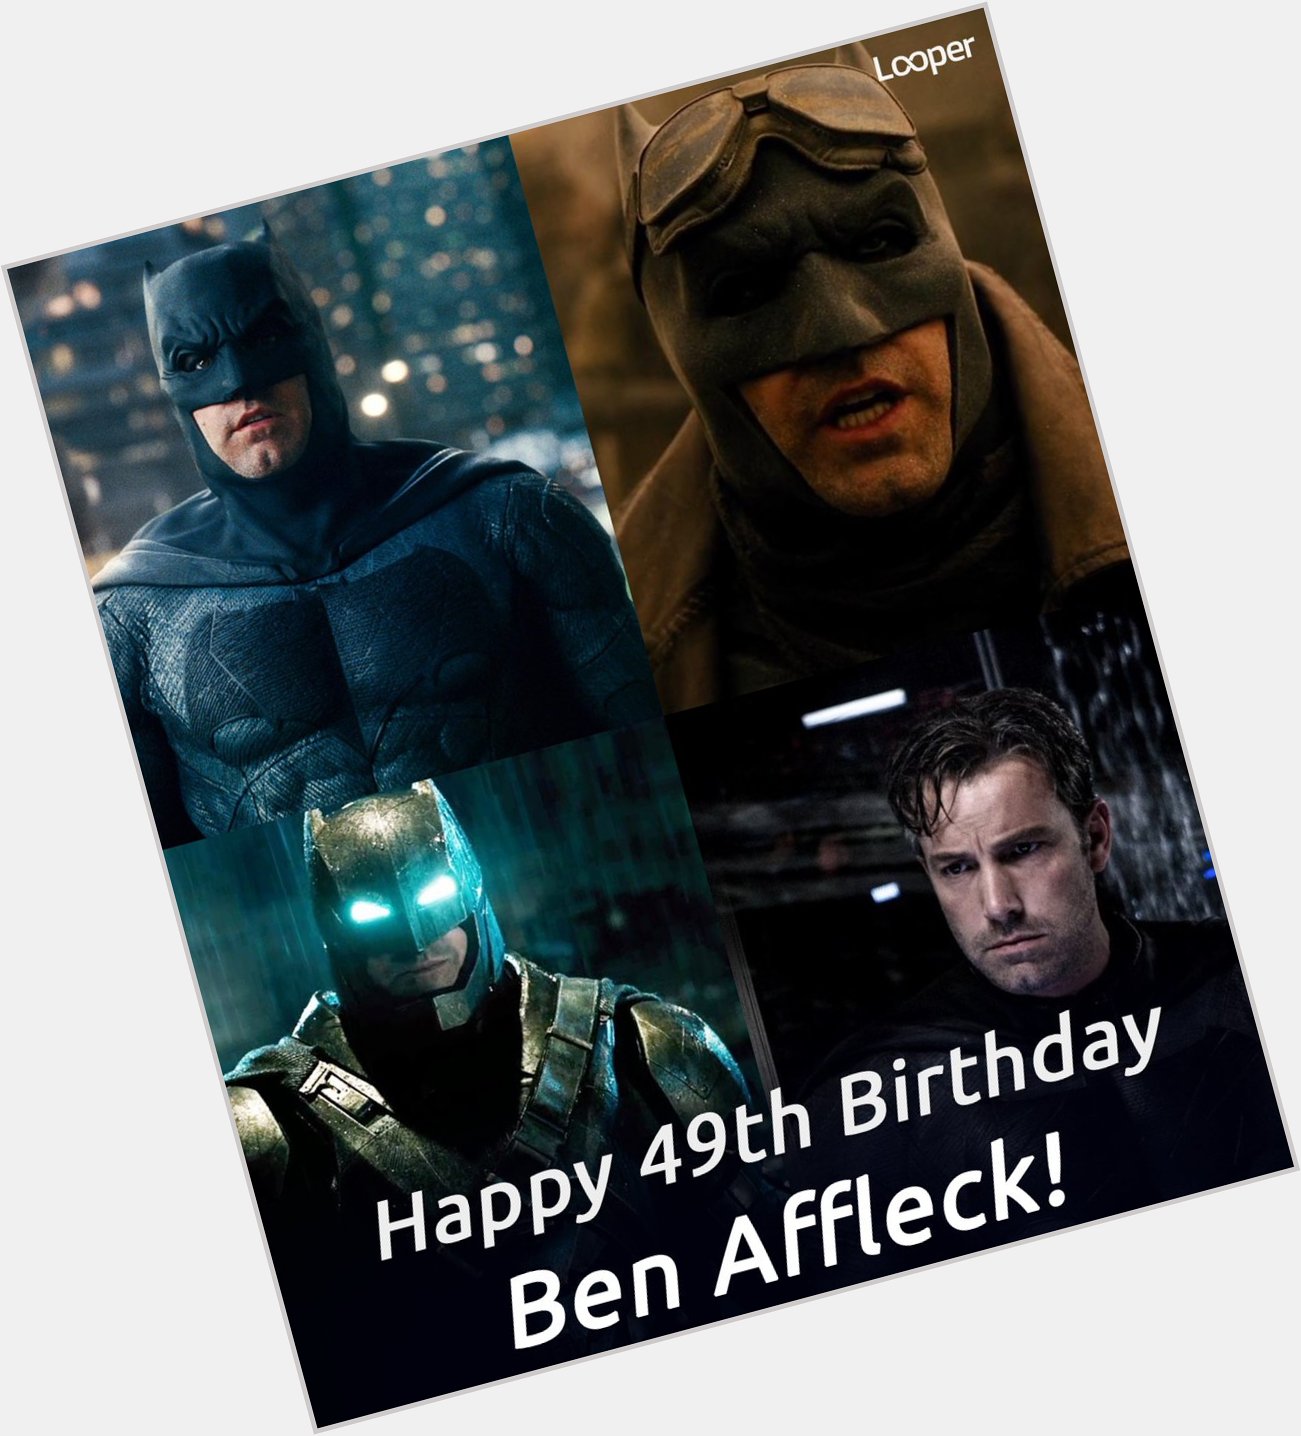 Happy Birthday Ben Affleck! 